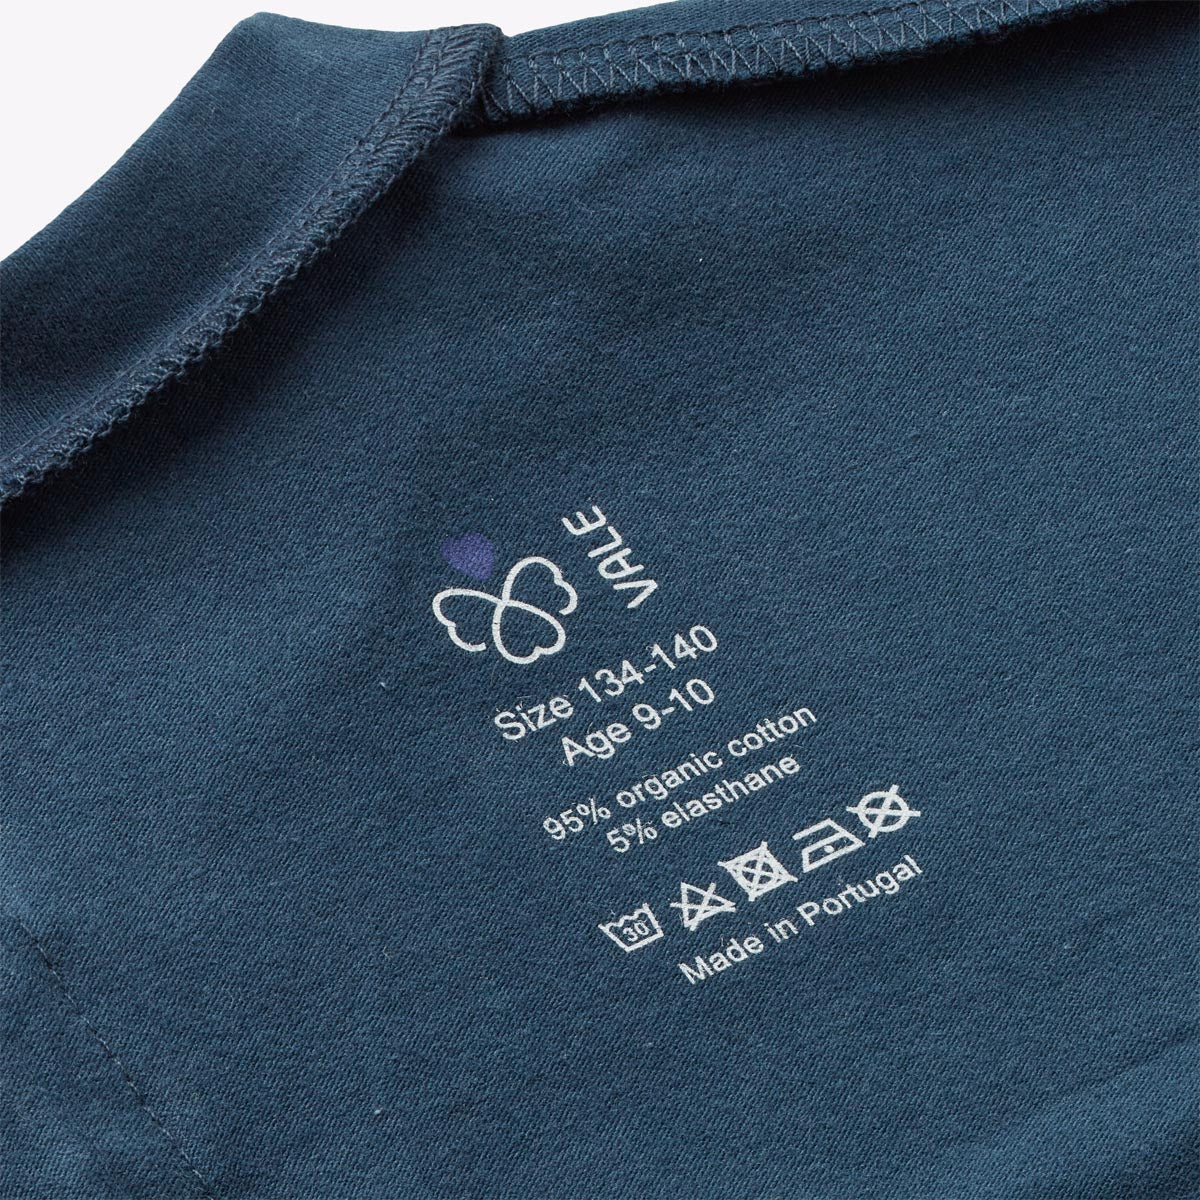 ABEL T-shirt for disabled children - Navy Blue (printed labels)